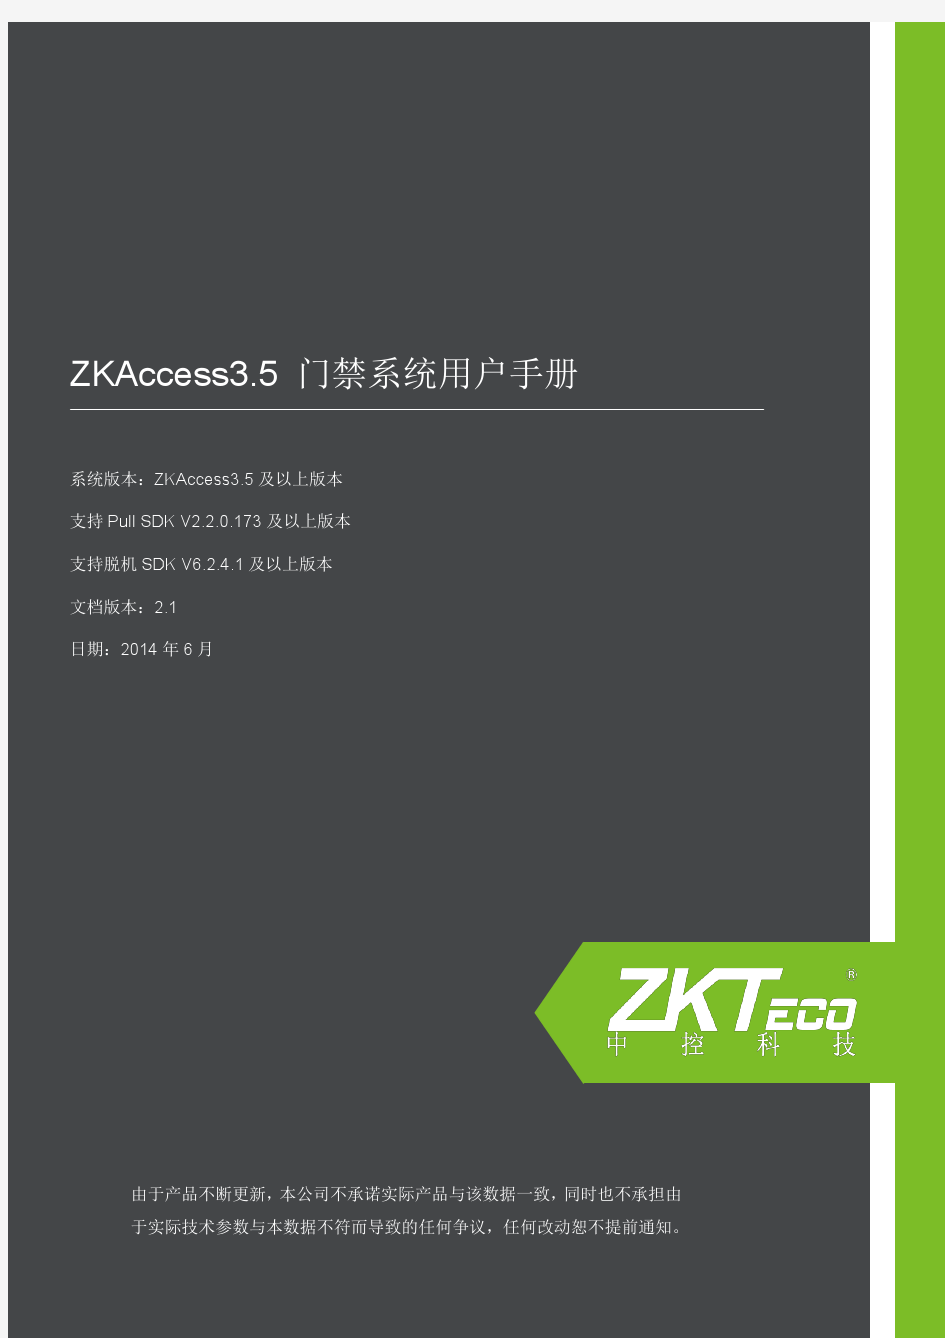 ZKAccess3.5门禁软件用户手册V2.1